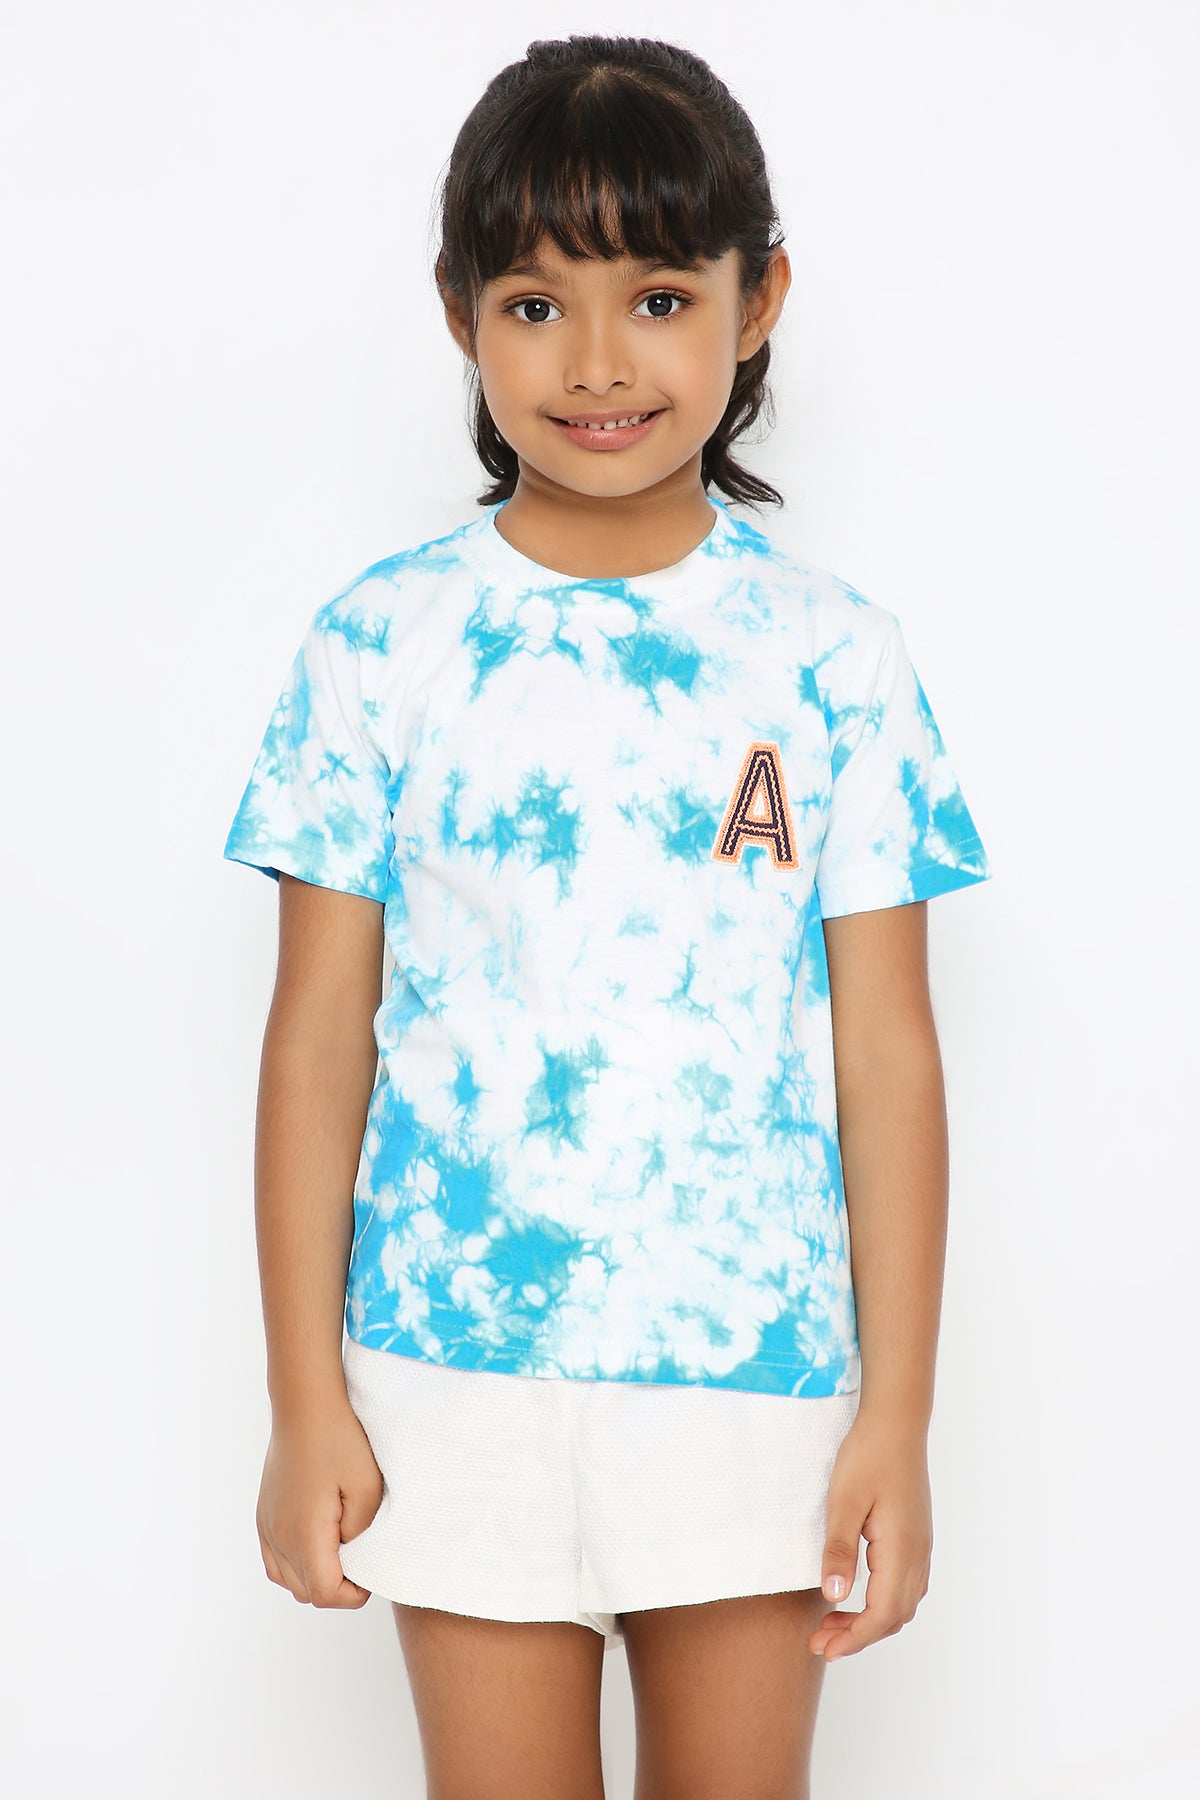 Aqua Blue Tie Dye T-shirt